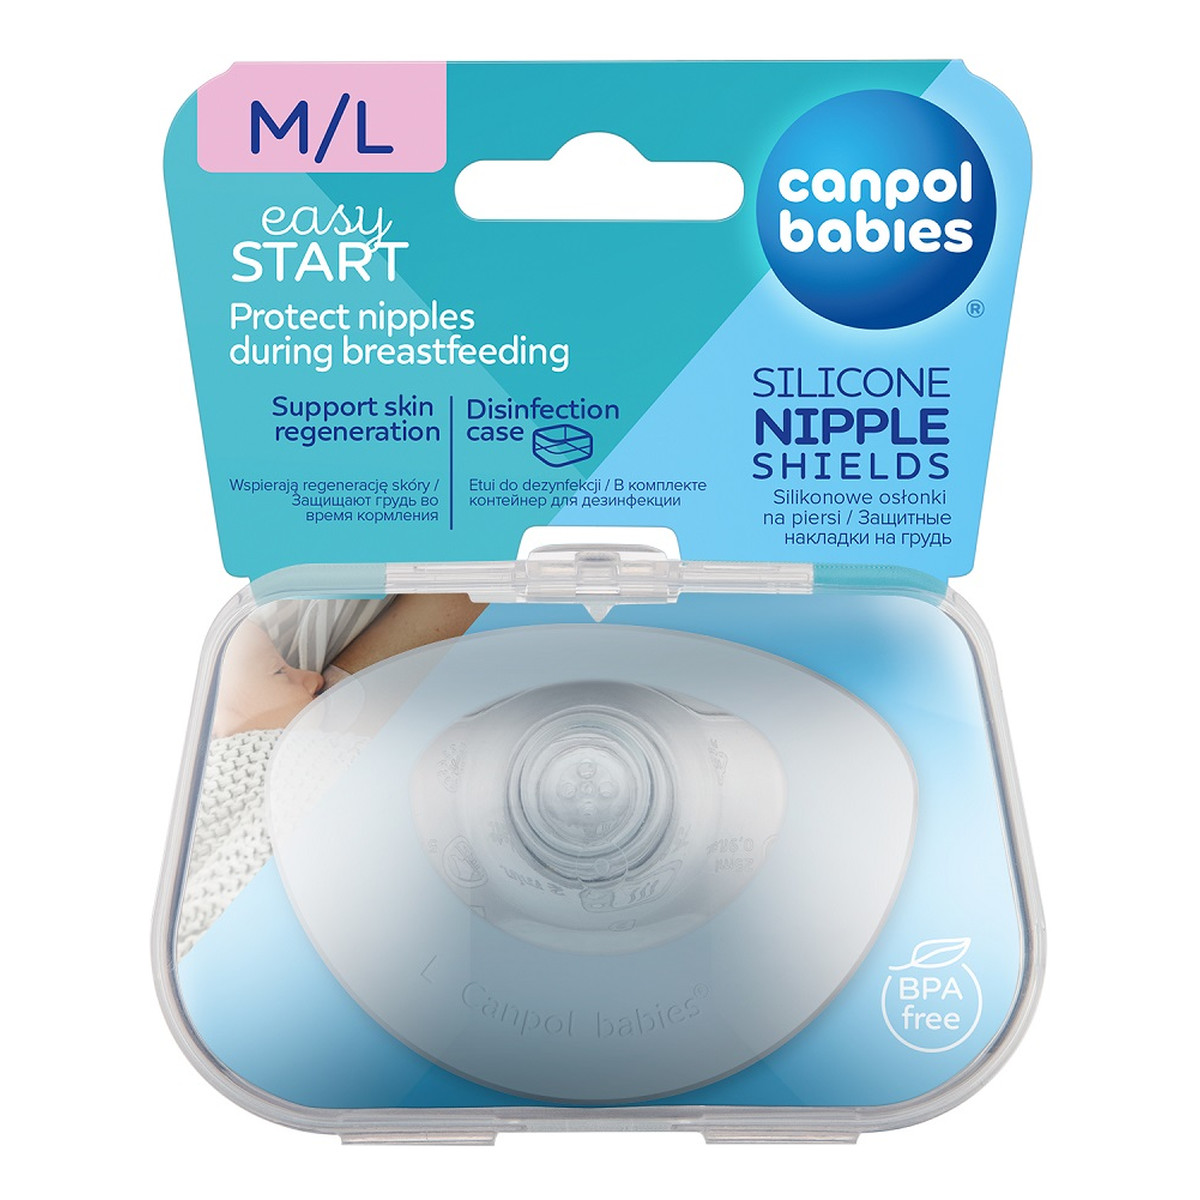 Canpol Babies Easystart silikonowe osłonki piersi m/l 2szt